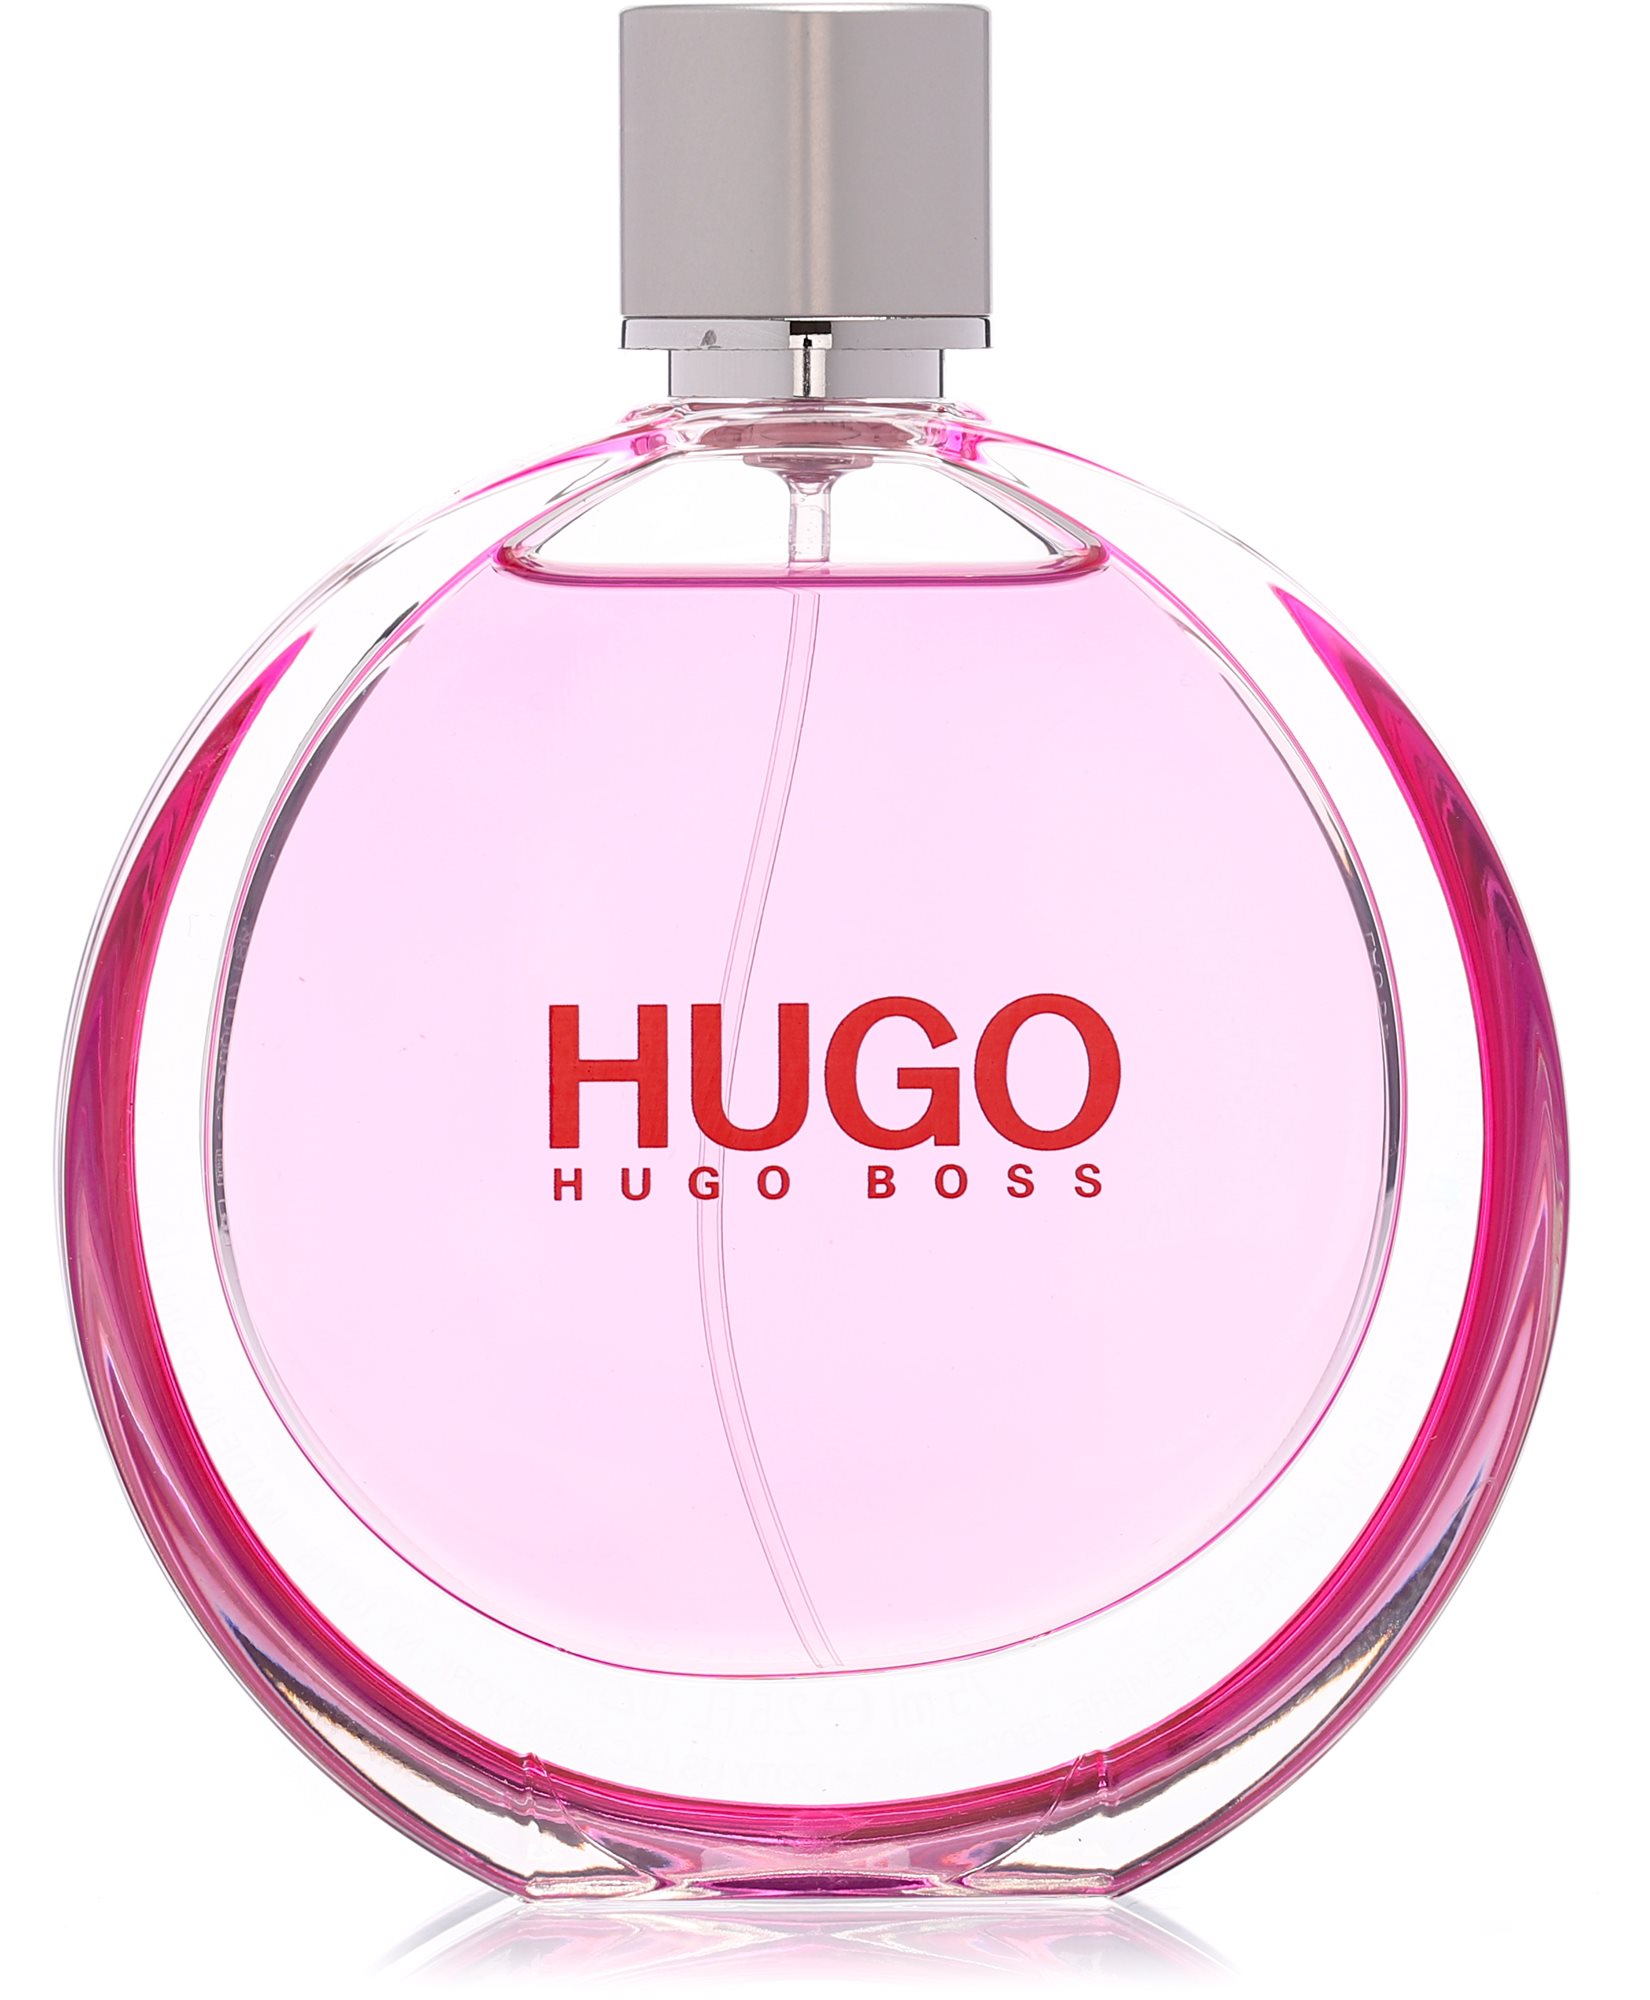 HUGO BOSS Hugo Woman Extreme EdP 75 ml